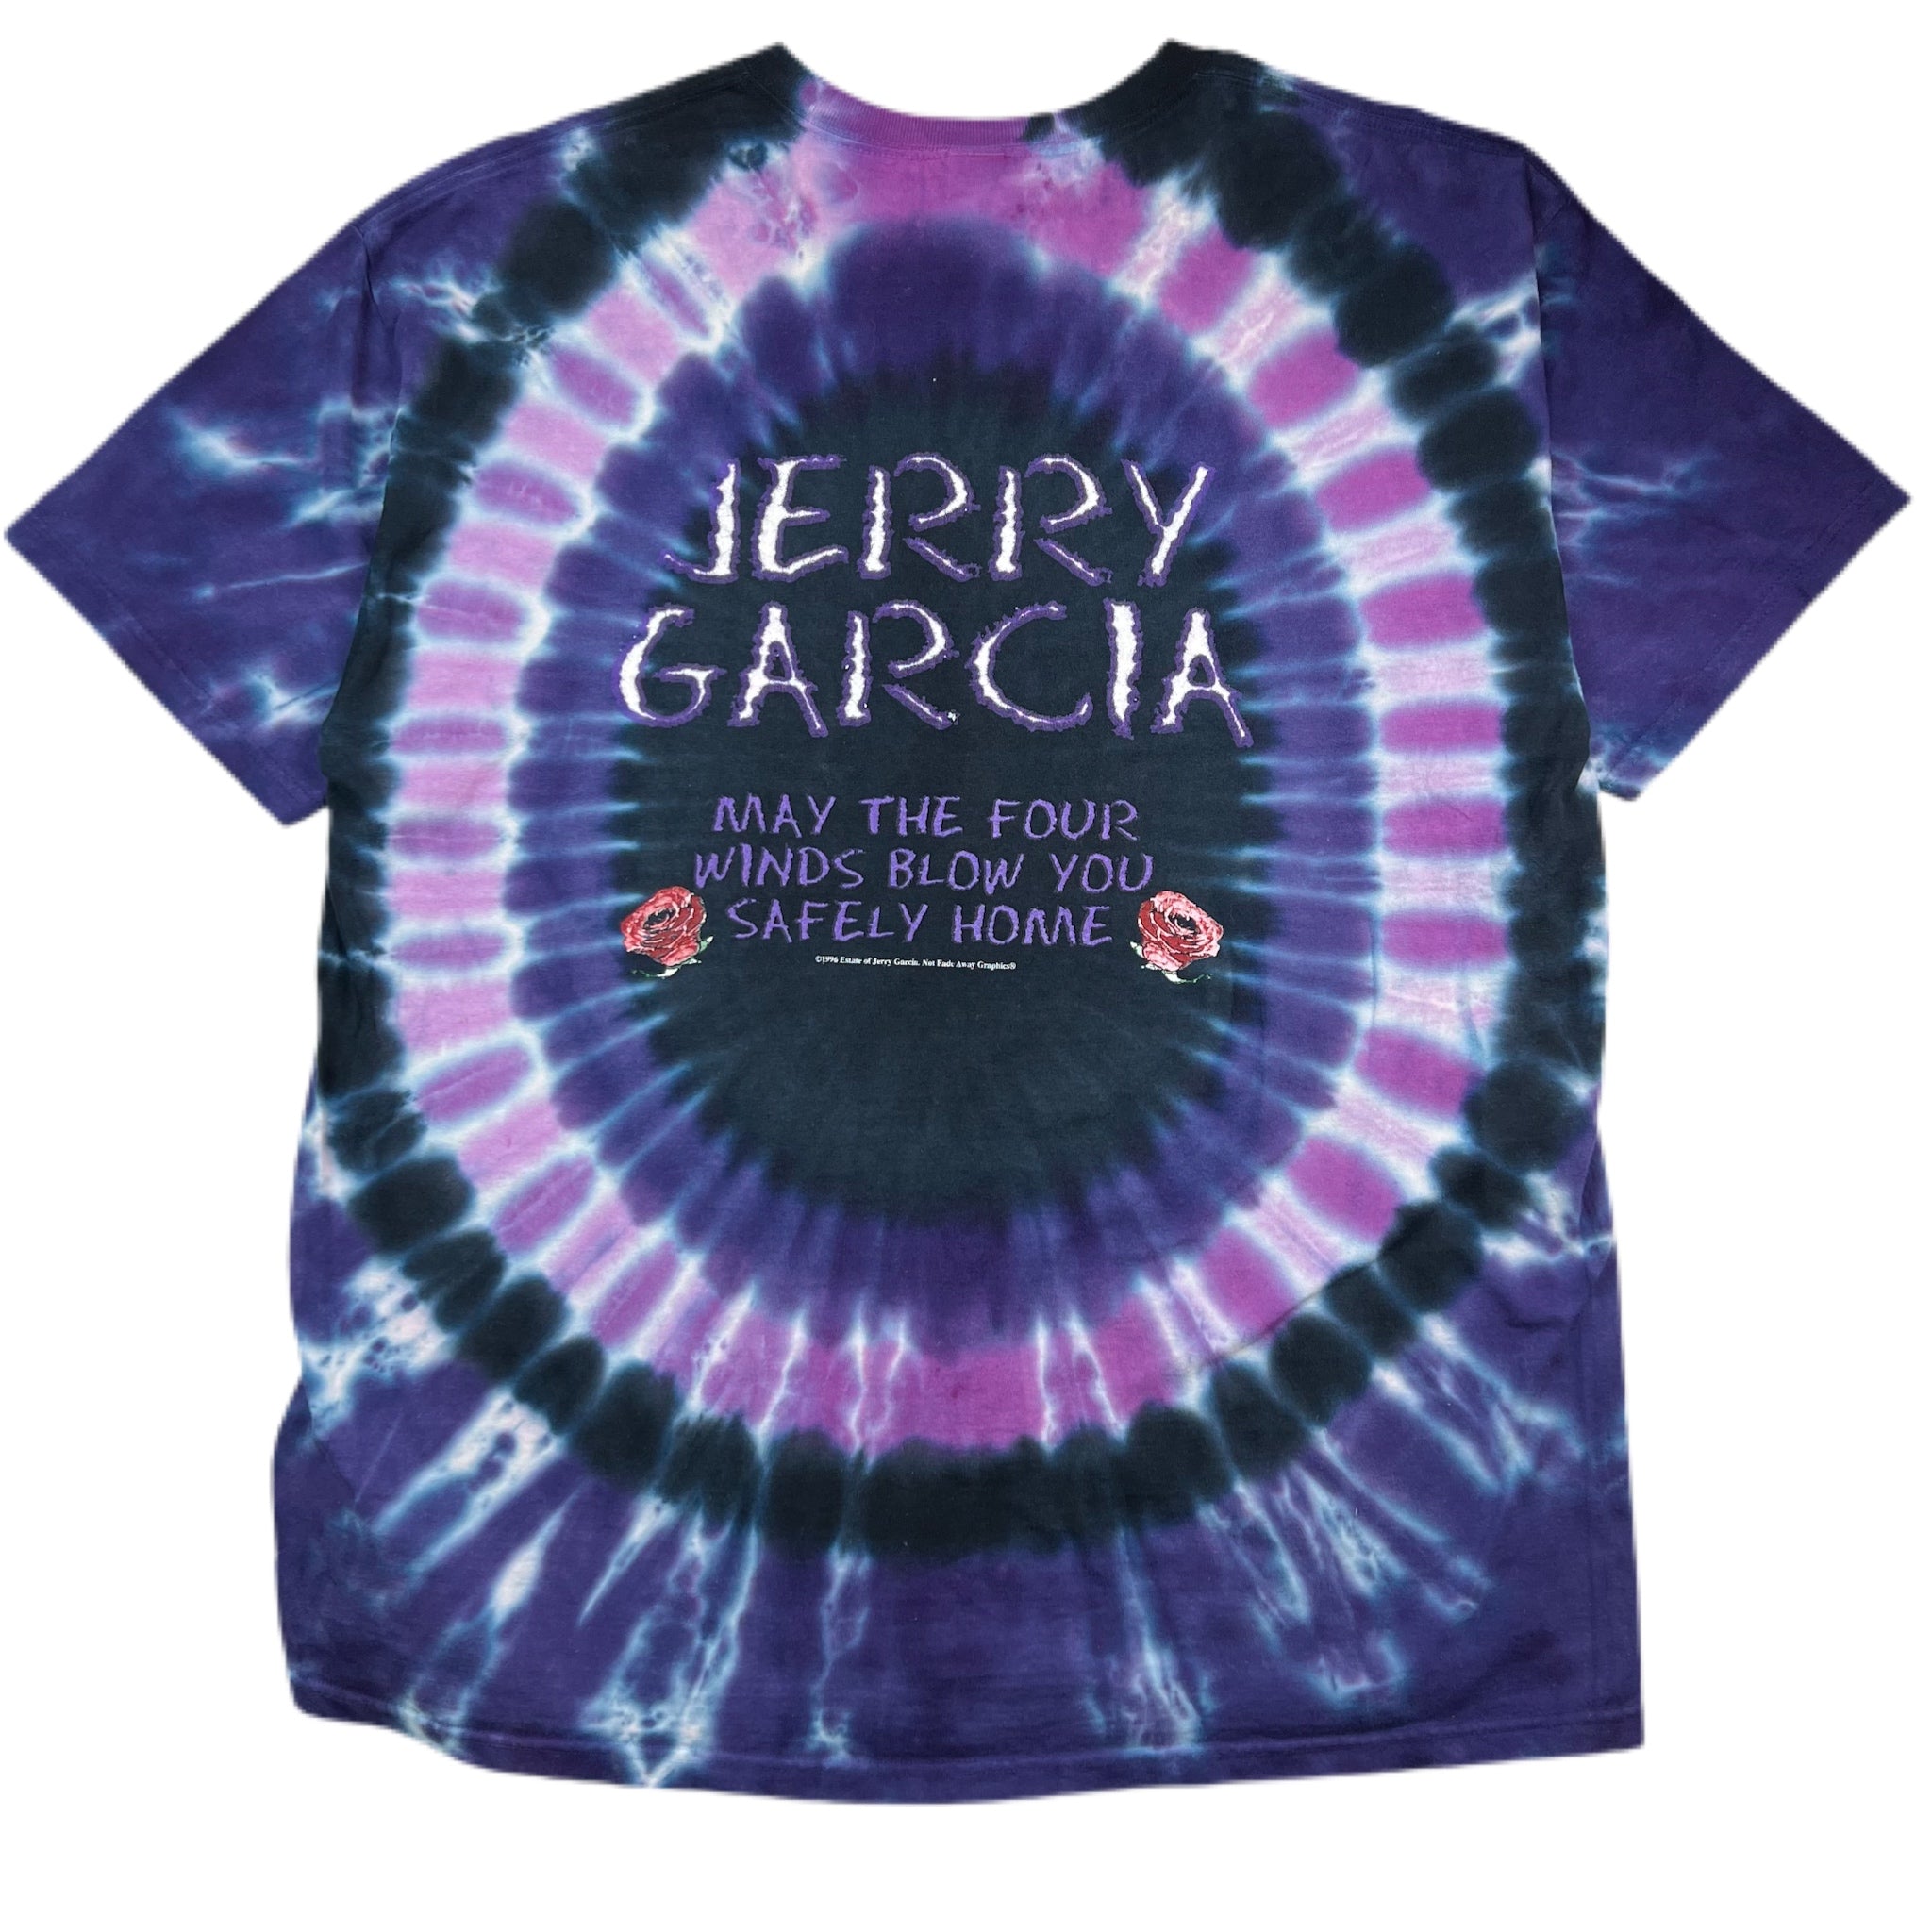 1995 Jerry Garcia Memorial Tye Dye Tee